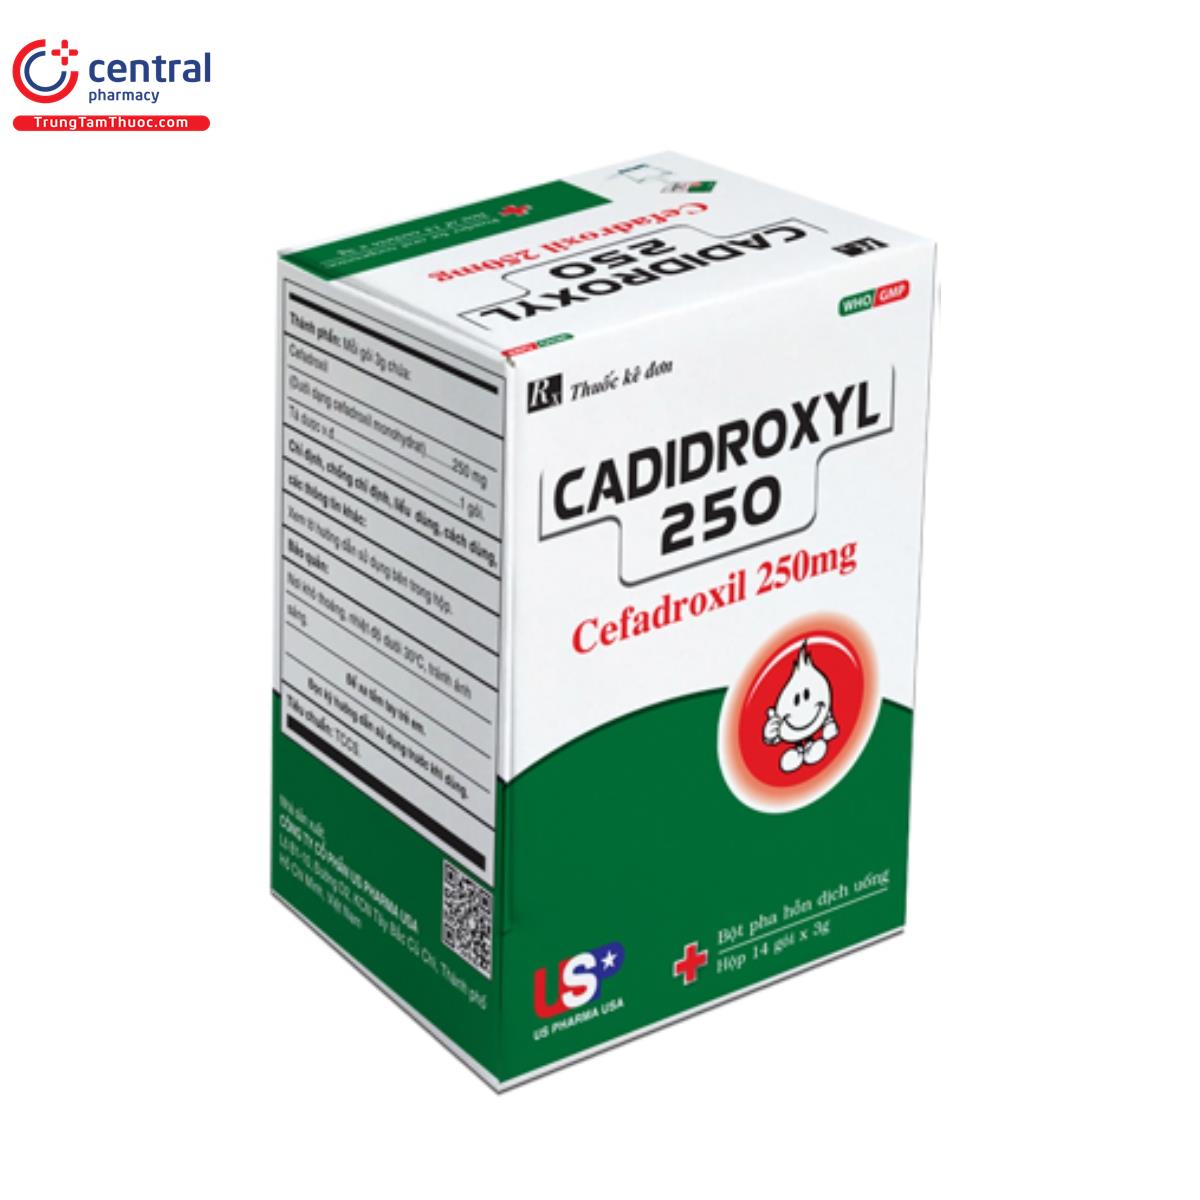 cadidroxyl 250 2 D1658